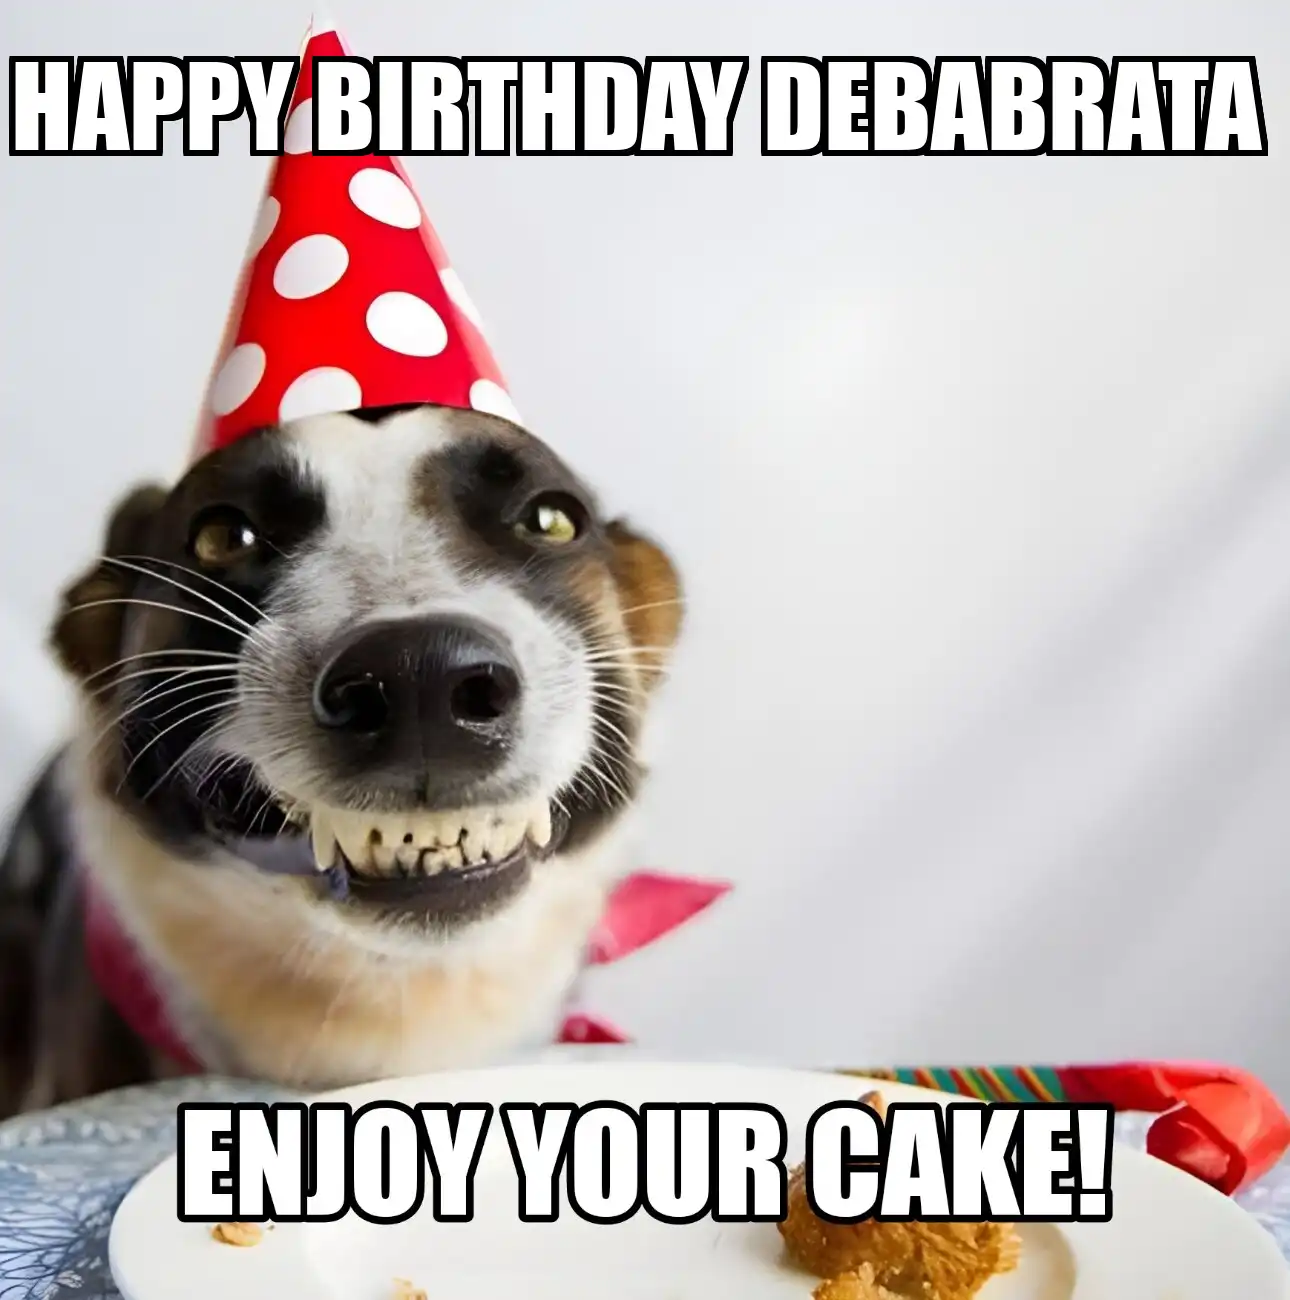 Happy Birthday Debabrata Enjoy Your Cake Dog Meme